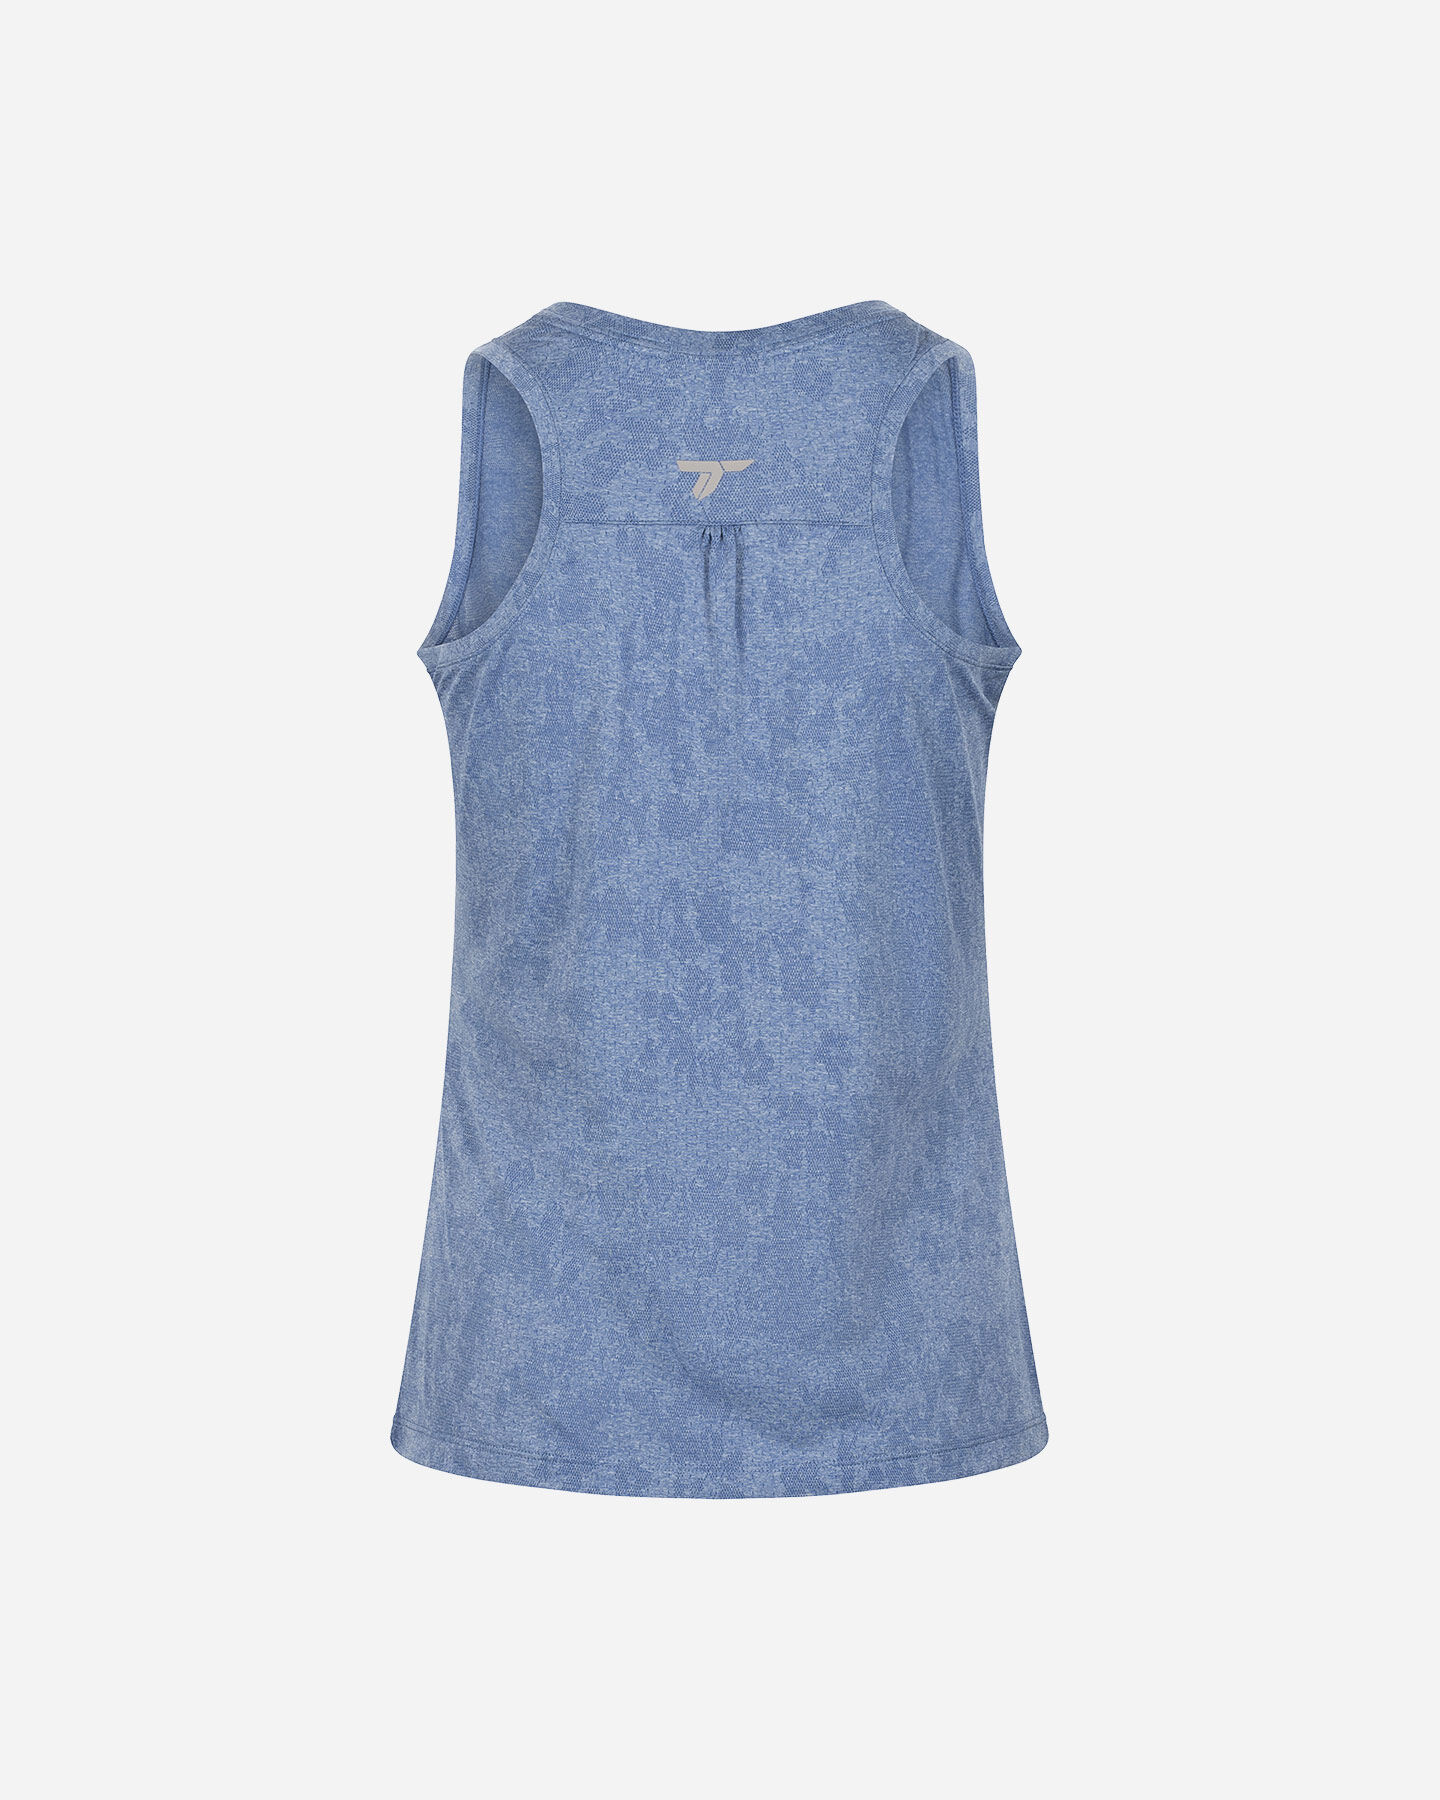  T-Shirt COLUMBIA BLUEBIRD CANYON W S5648740|593|XS scatto 1